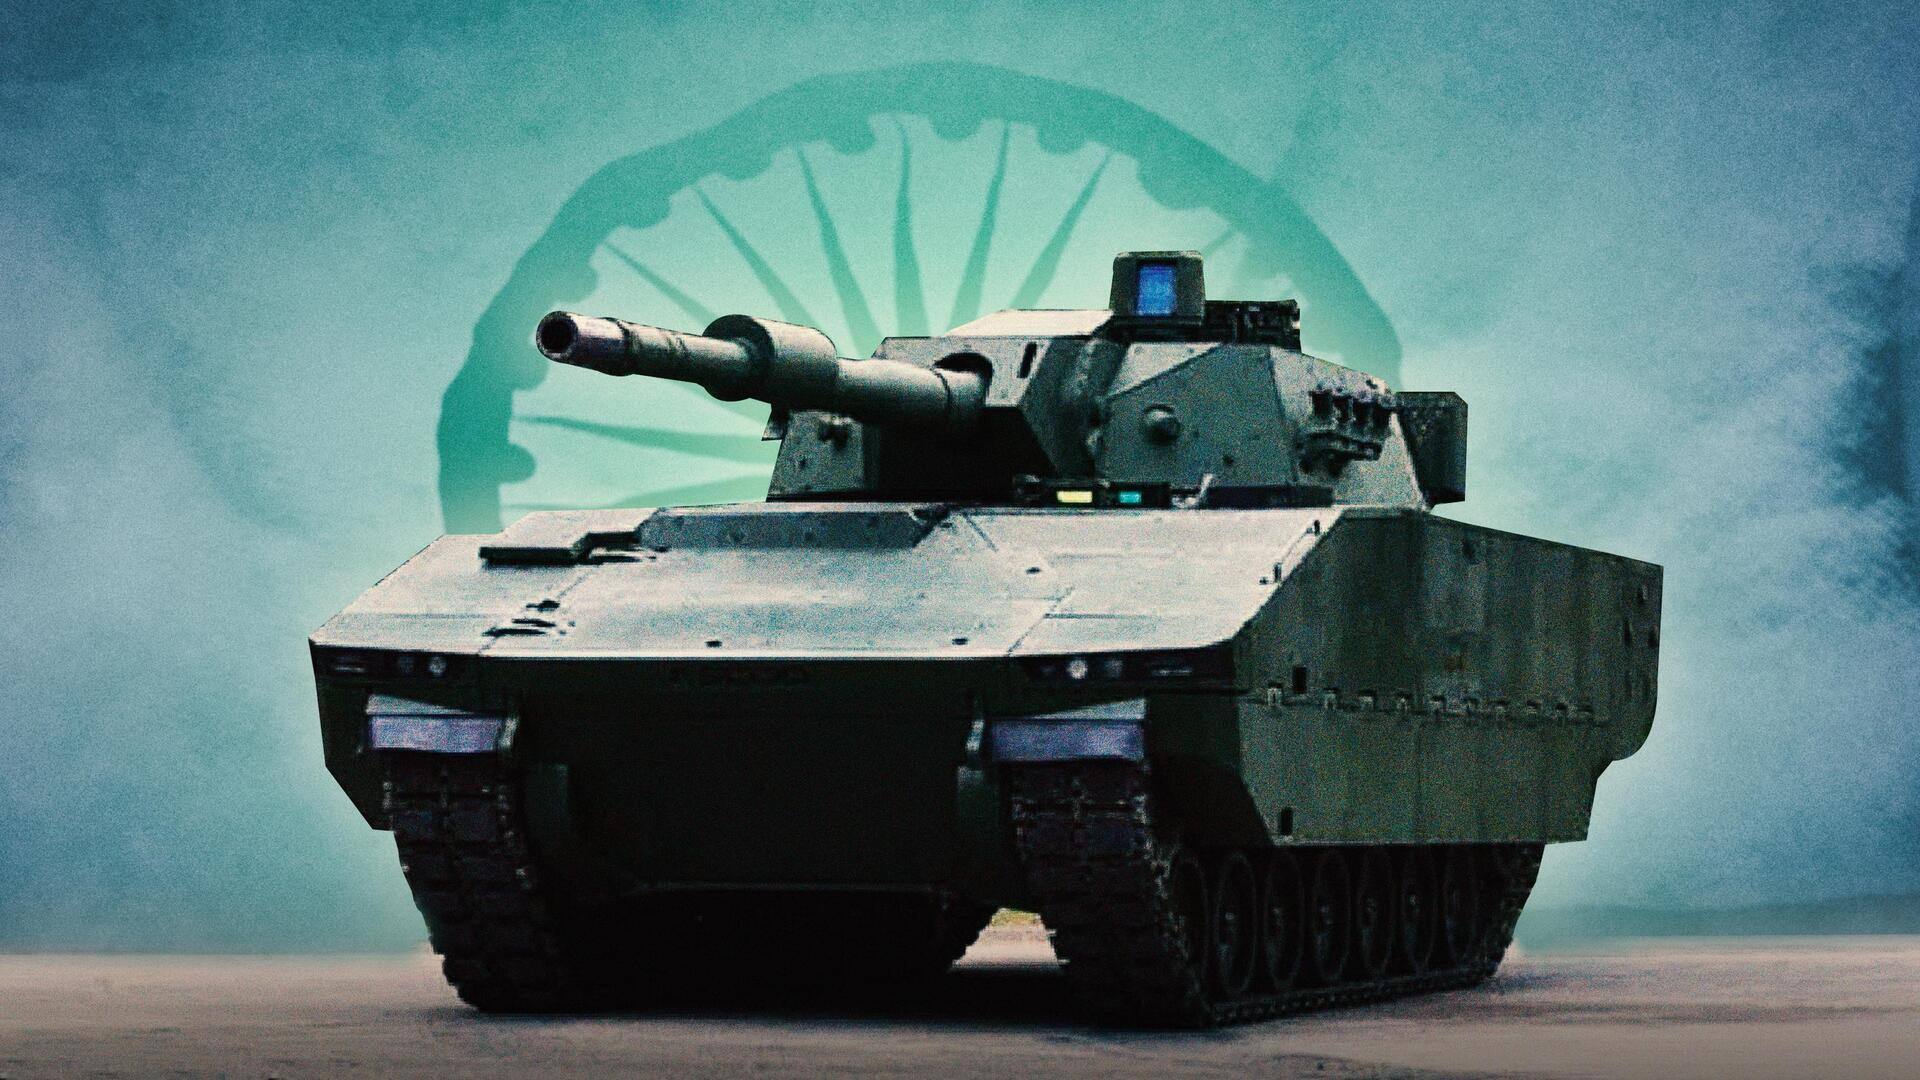 भारतीय सेना को जल्द मिलेगा पहला स्वदेशी लाइट टैंक, चीन को देगा कड़ी टक्कर